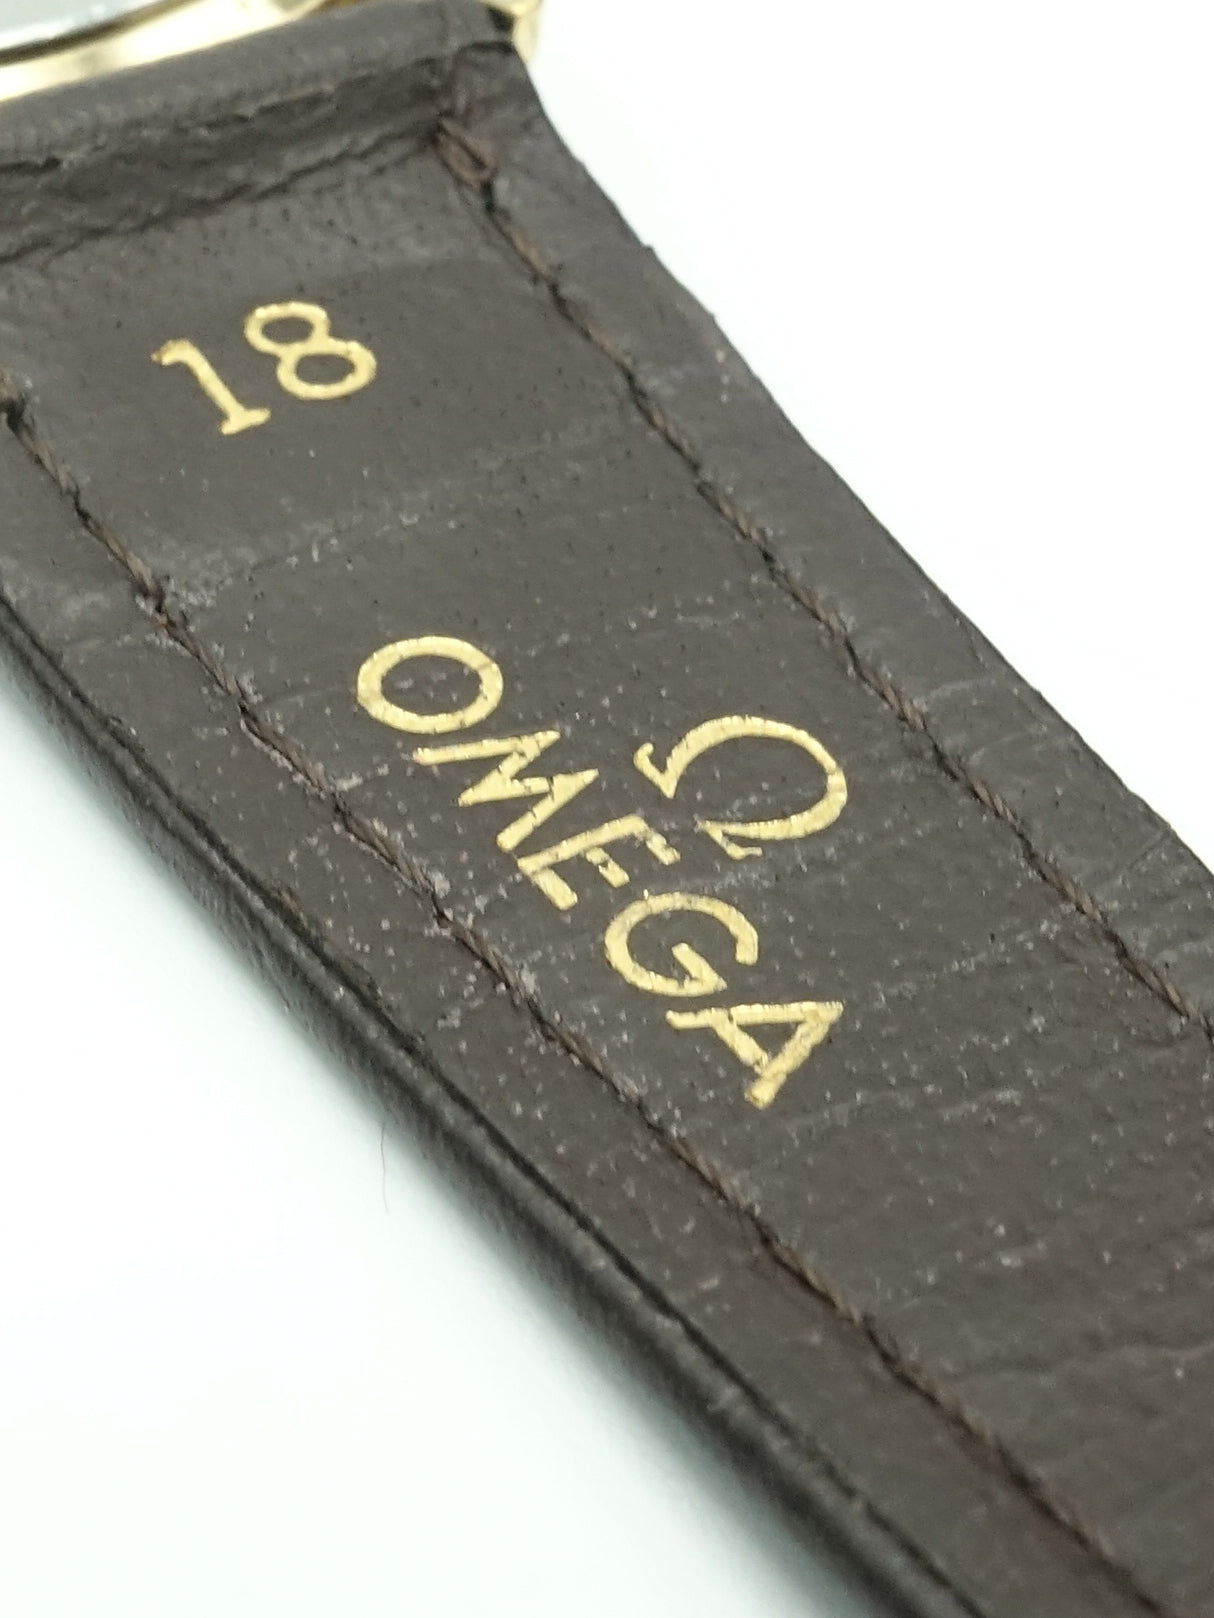 Omega Seamaster Quartz Ref. 196.0251